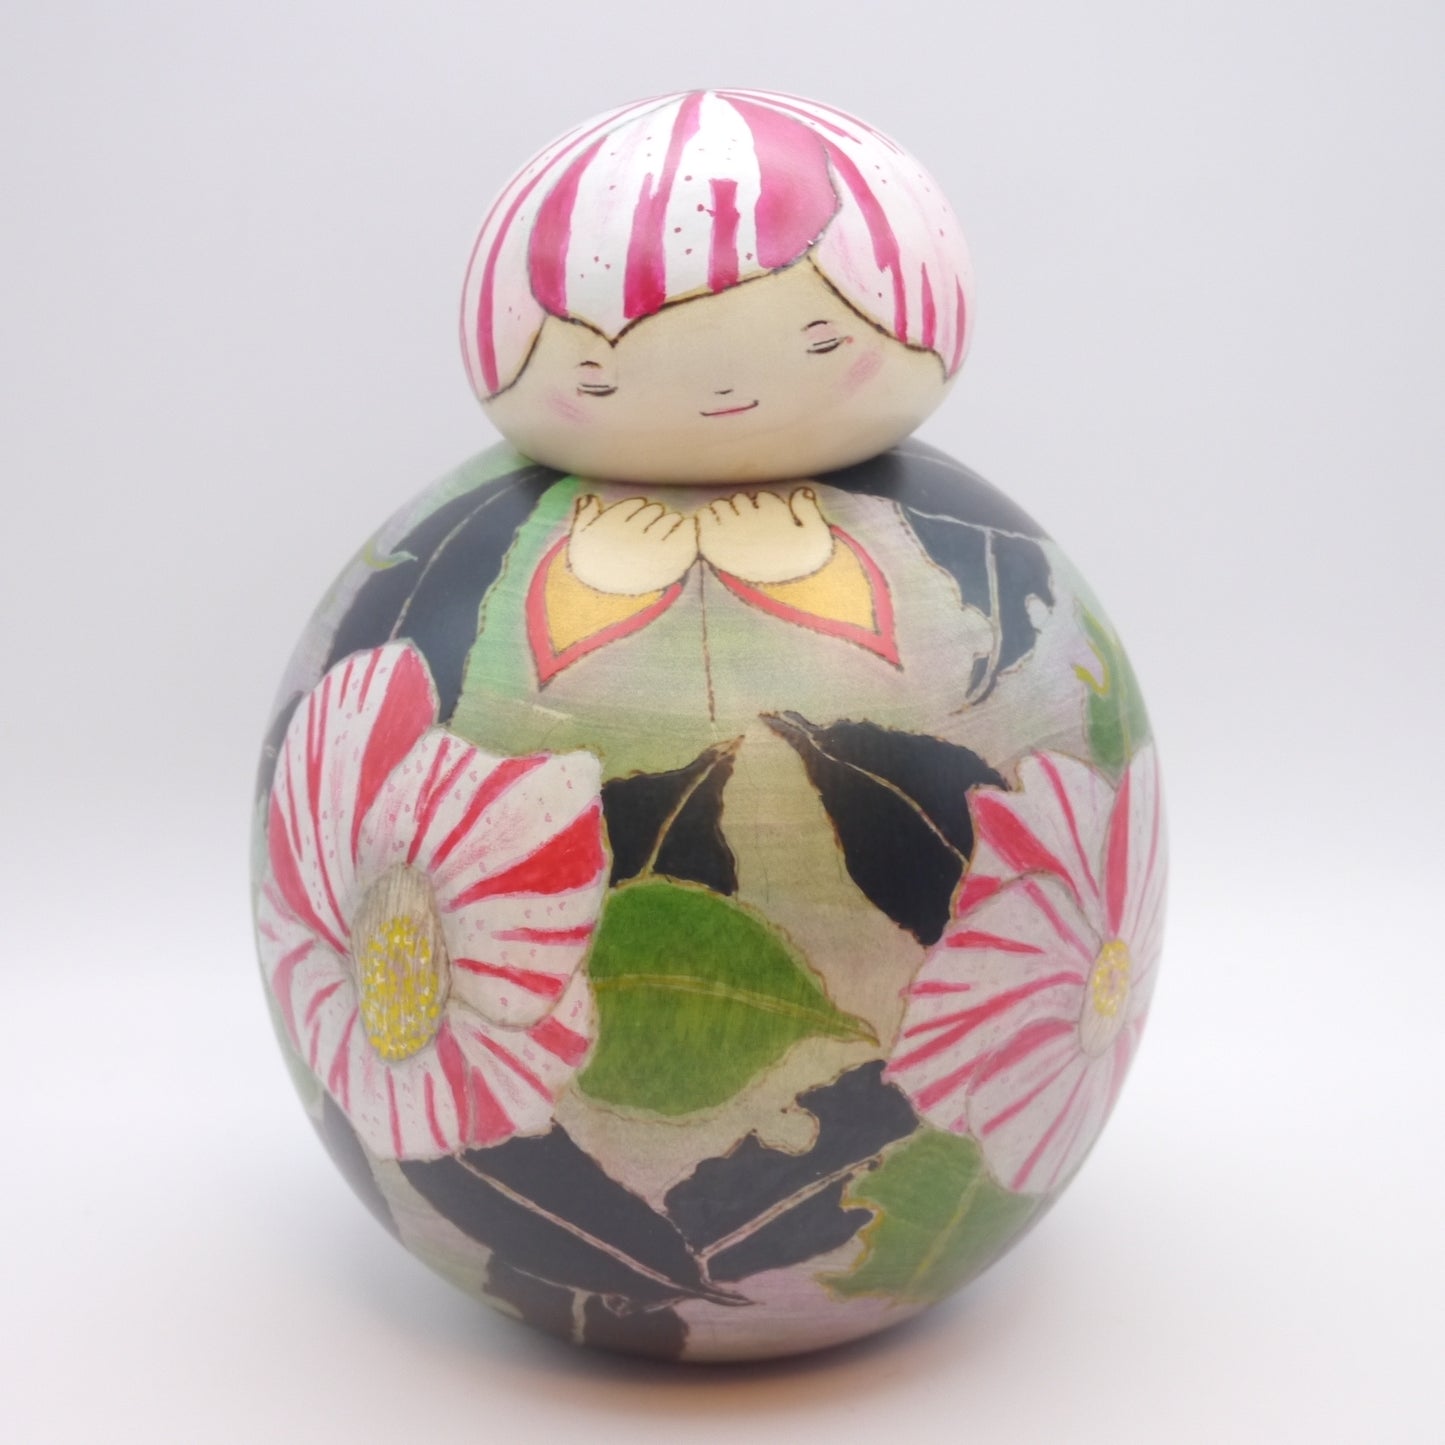 Kokeshi doll by Yasunori Oki "Camellia"